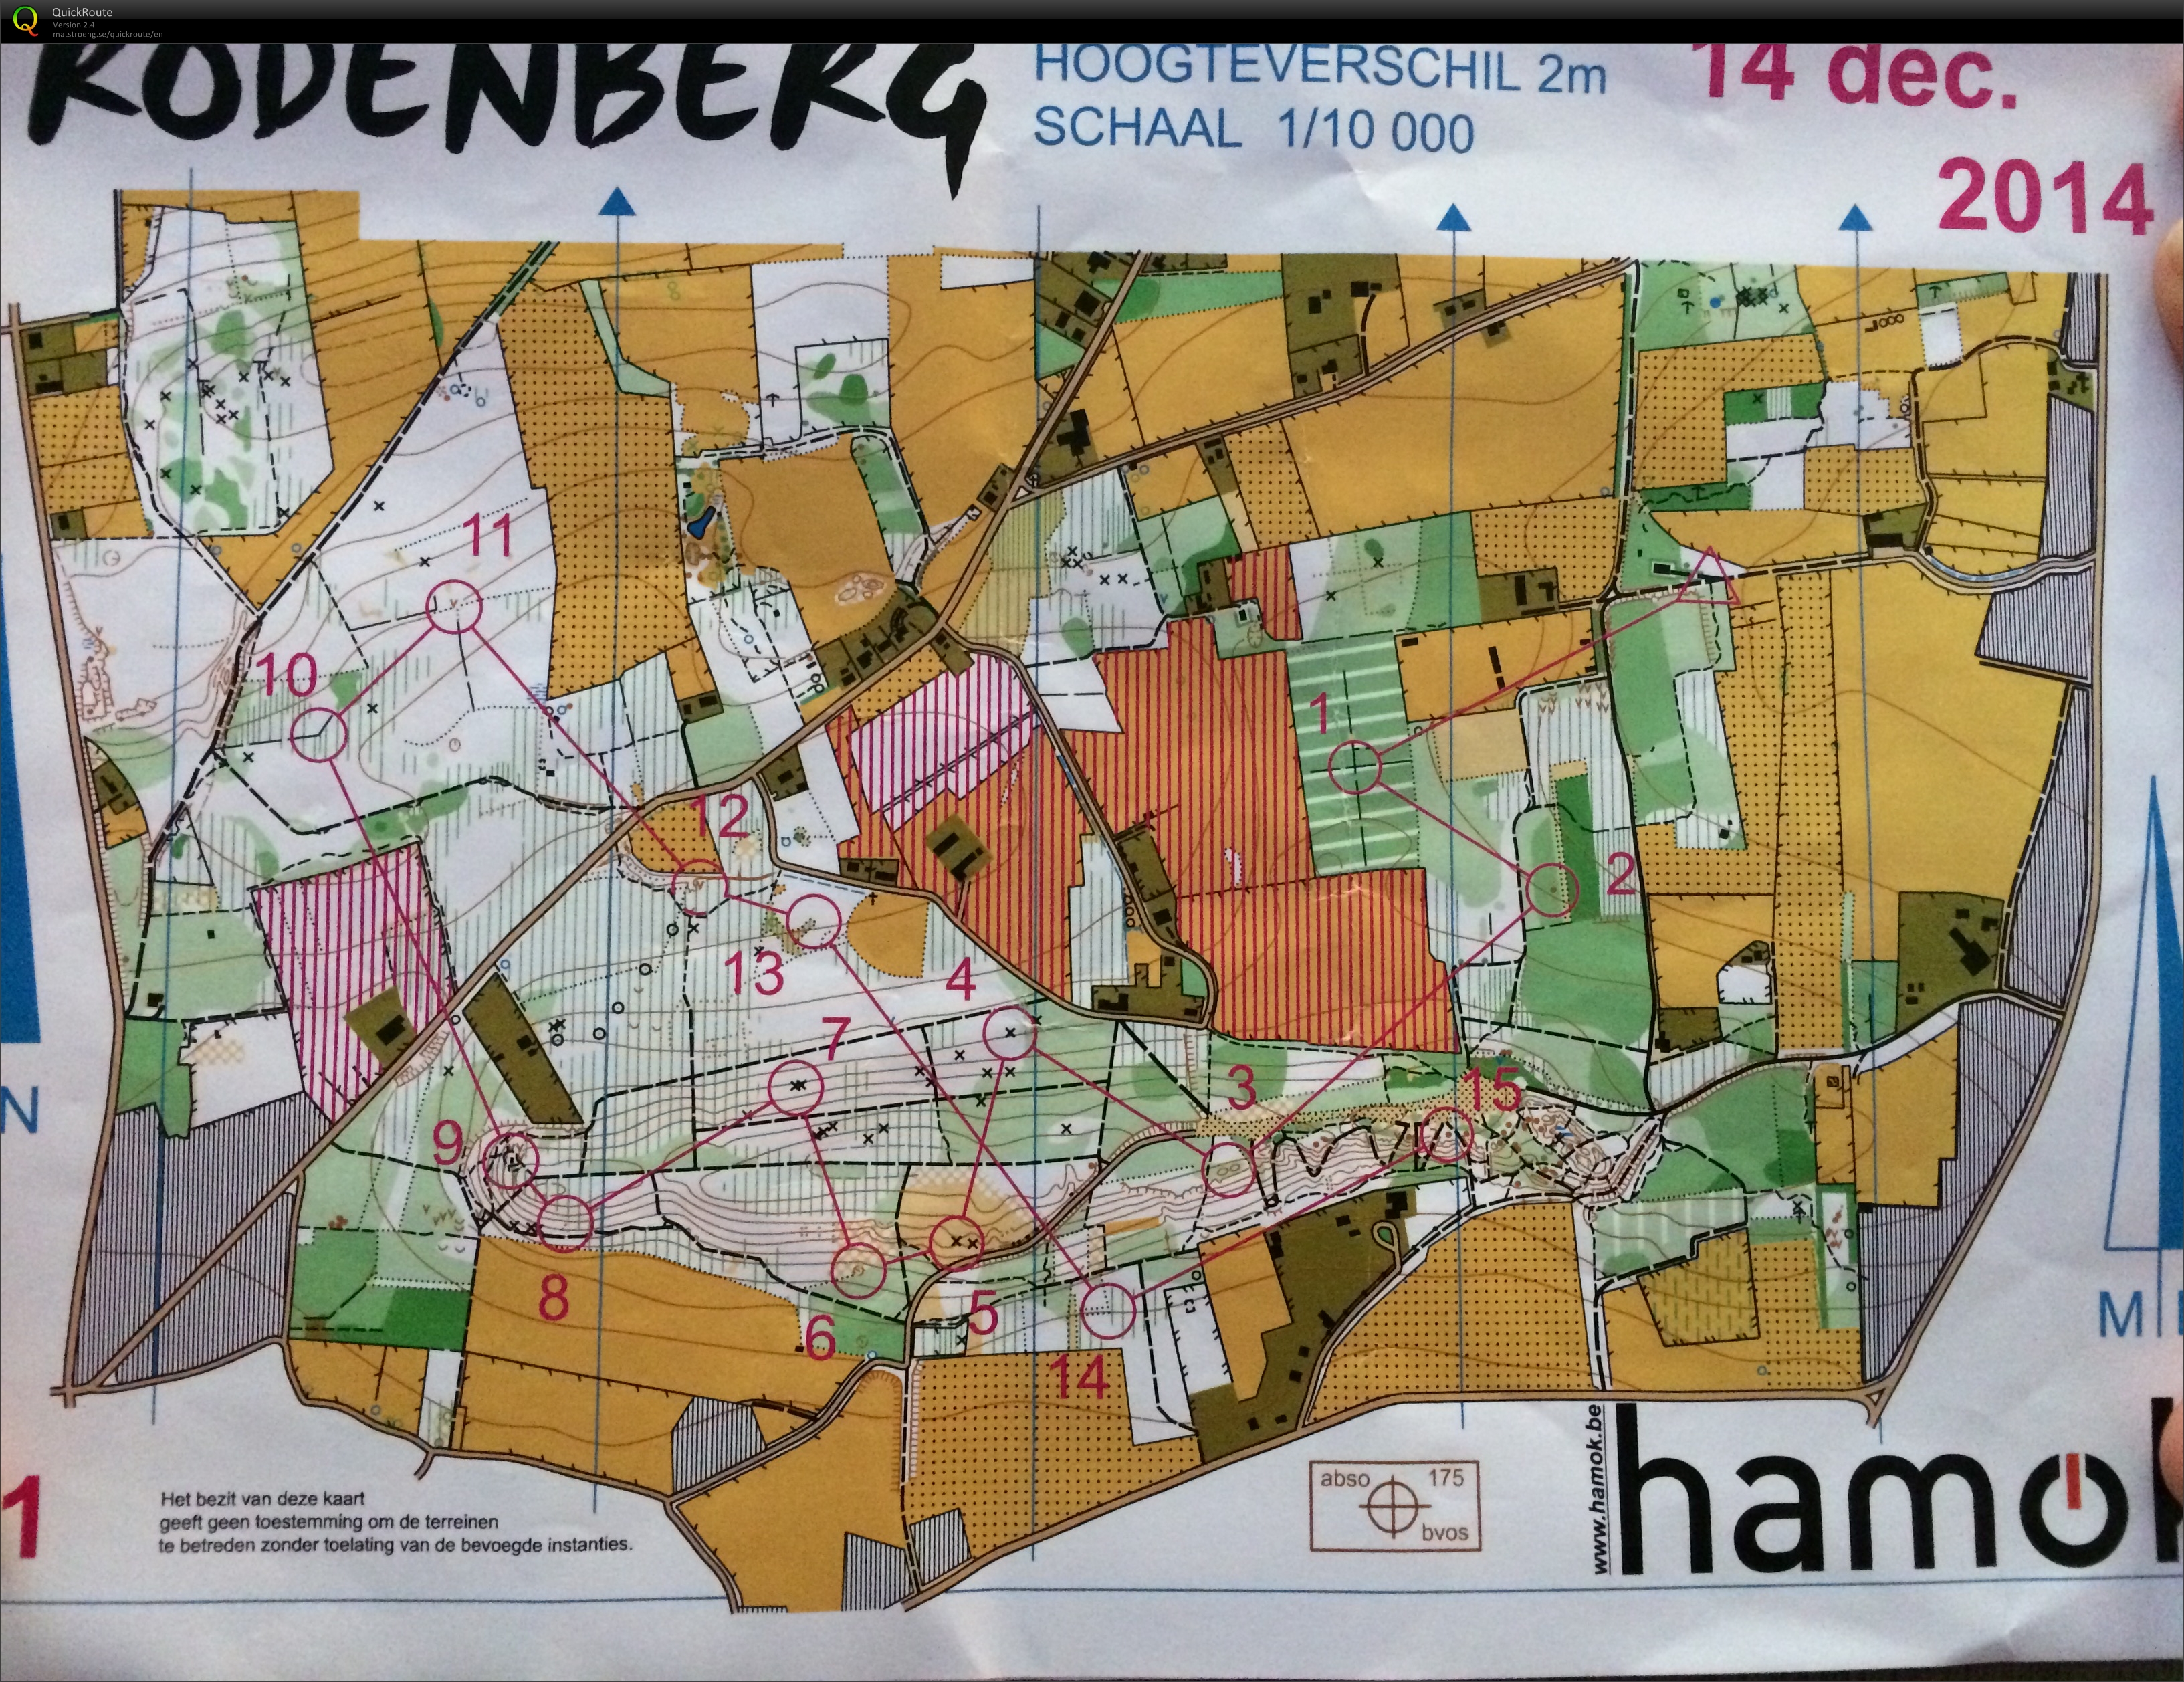 Rodenberg (14/12/2014)